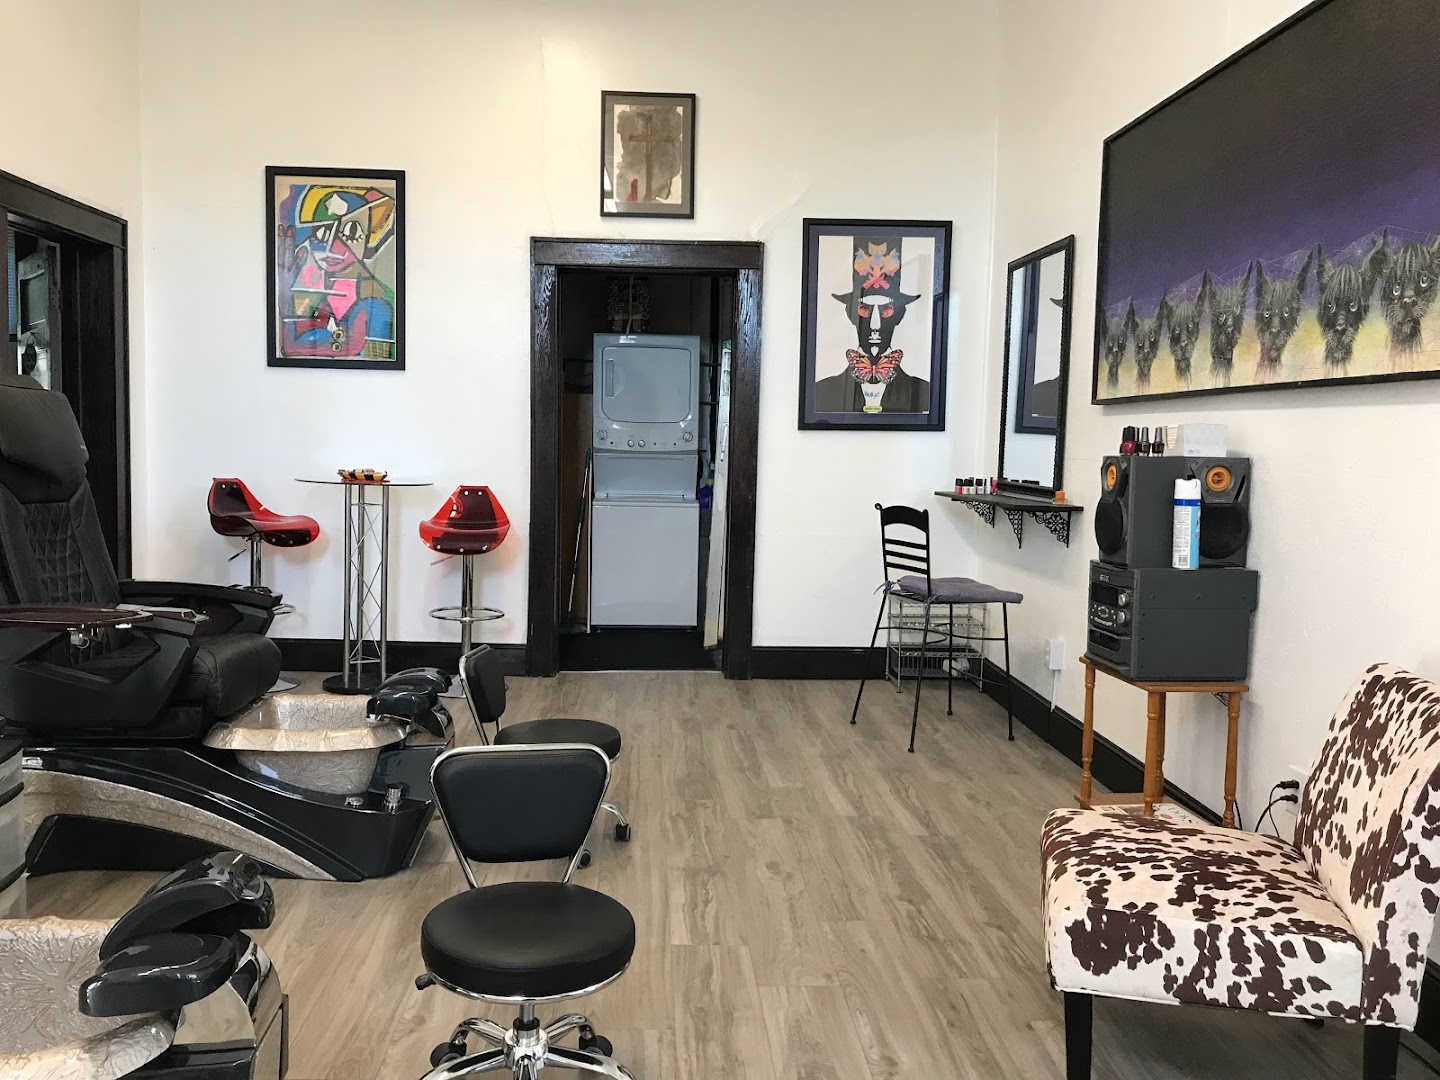 Studio 101 Salon